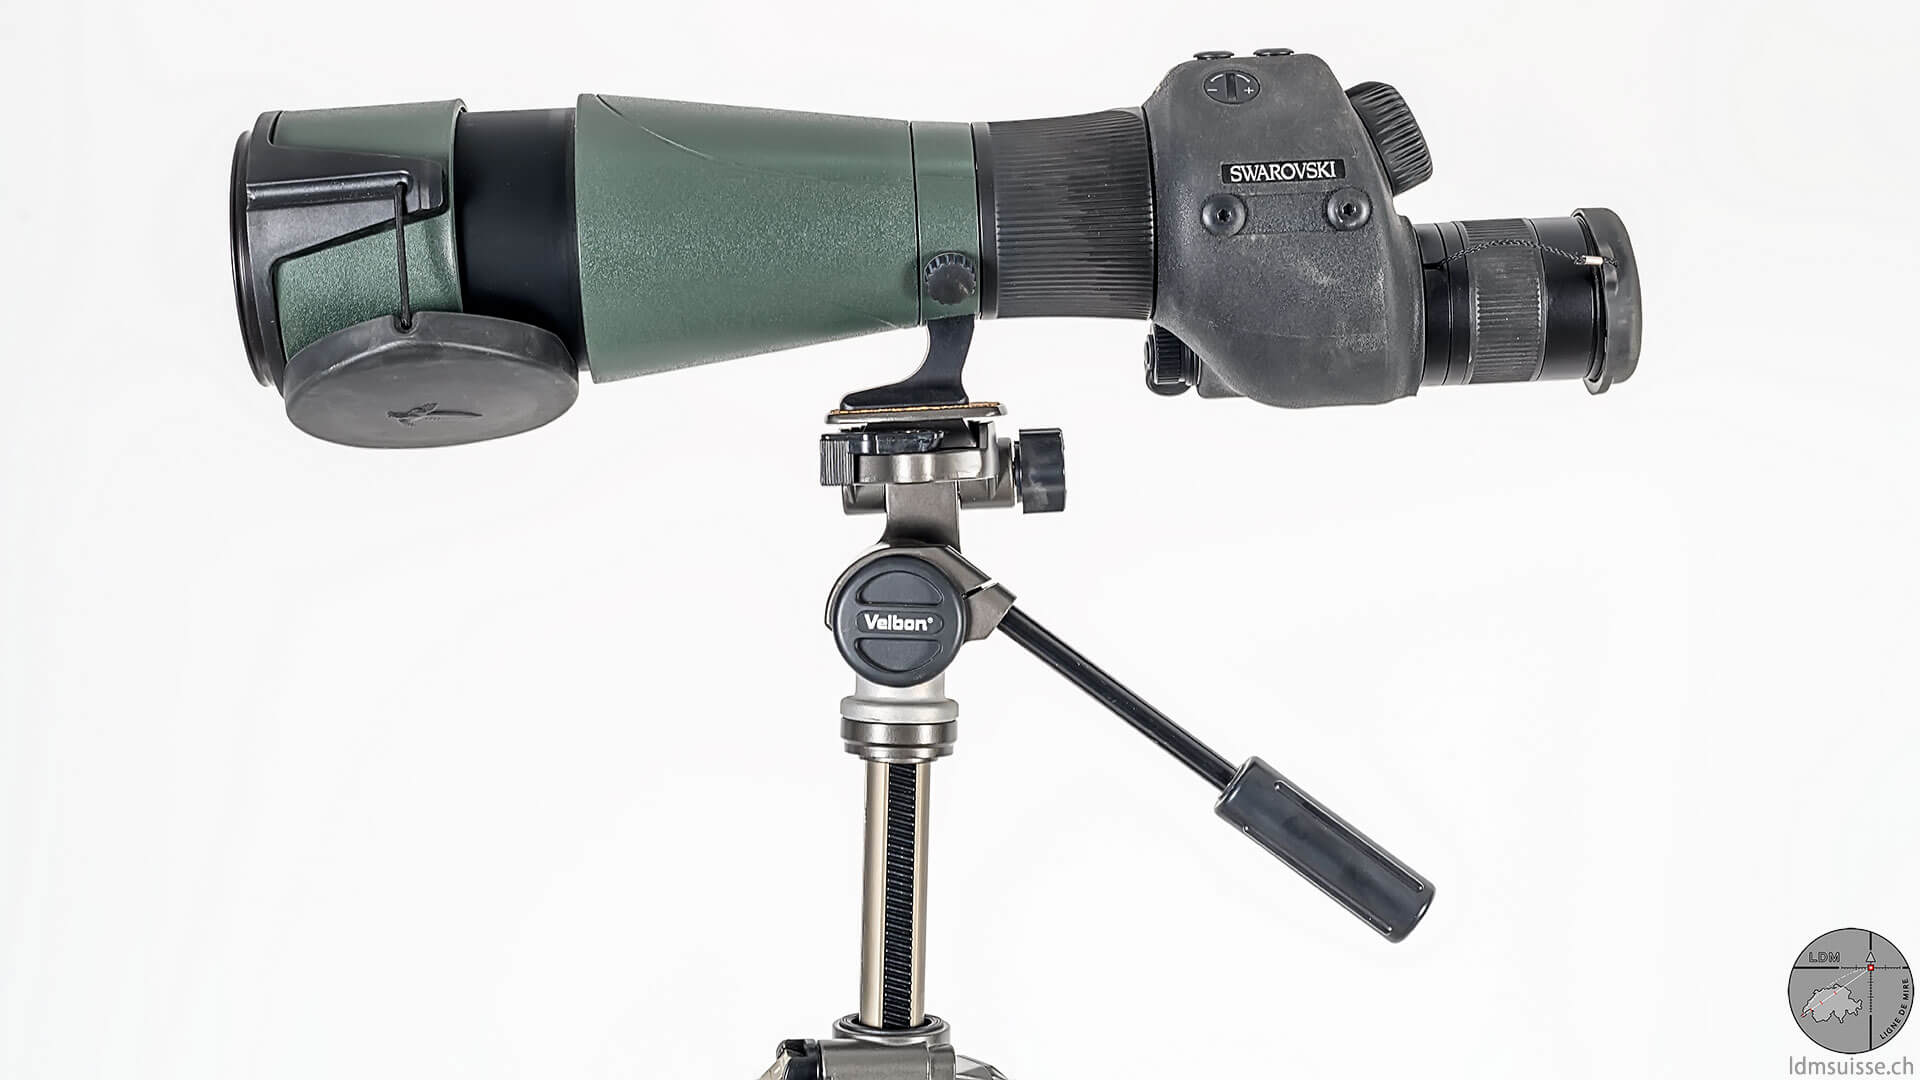 Swarovski STR 80 spotting scope